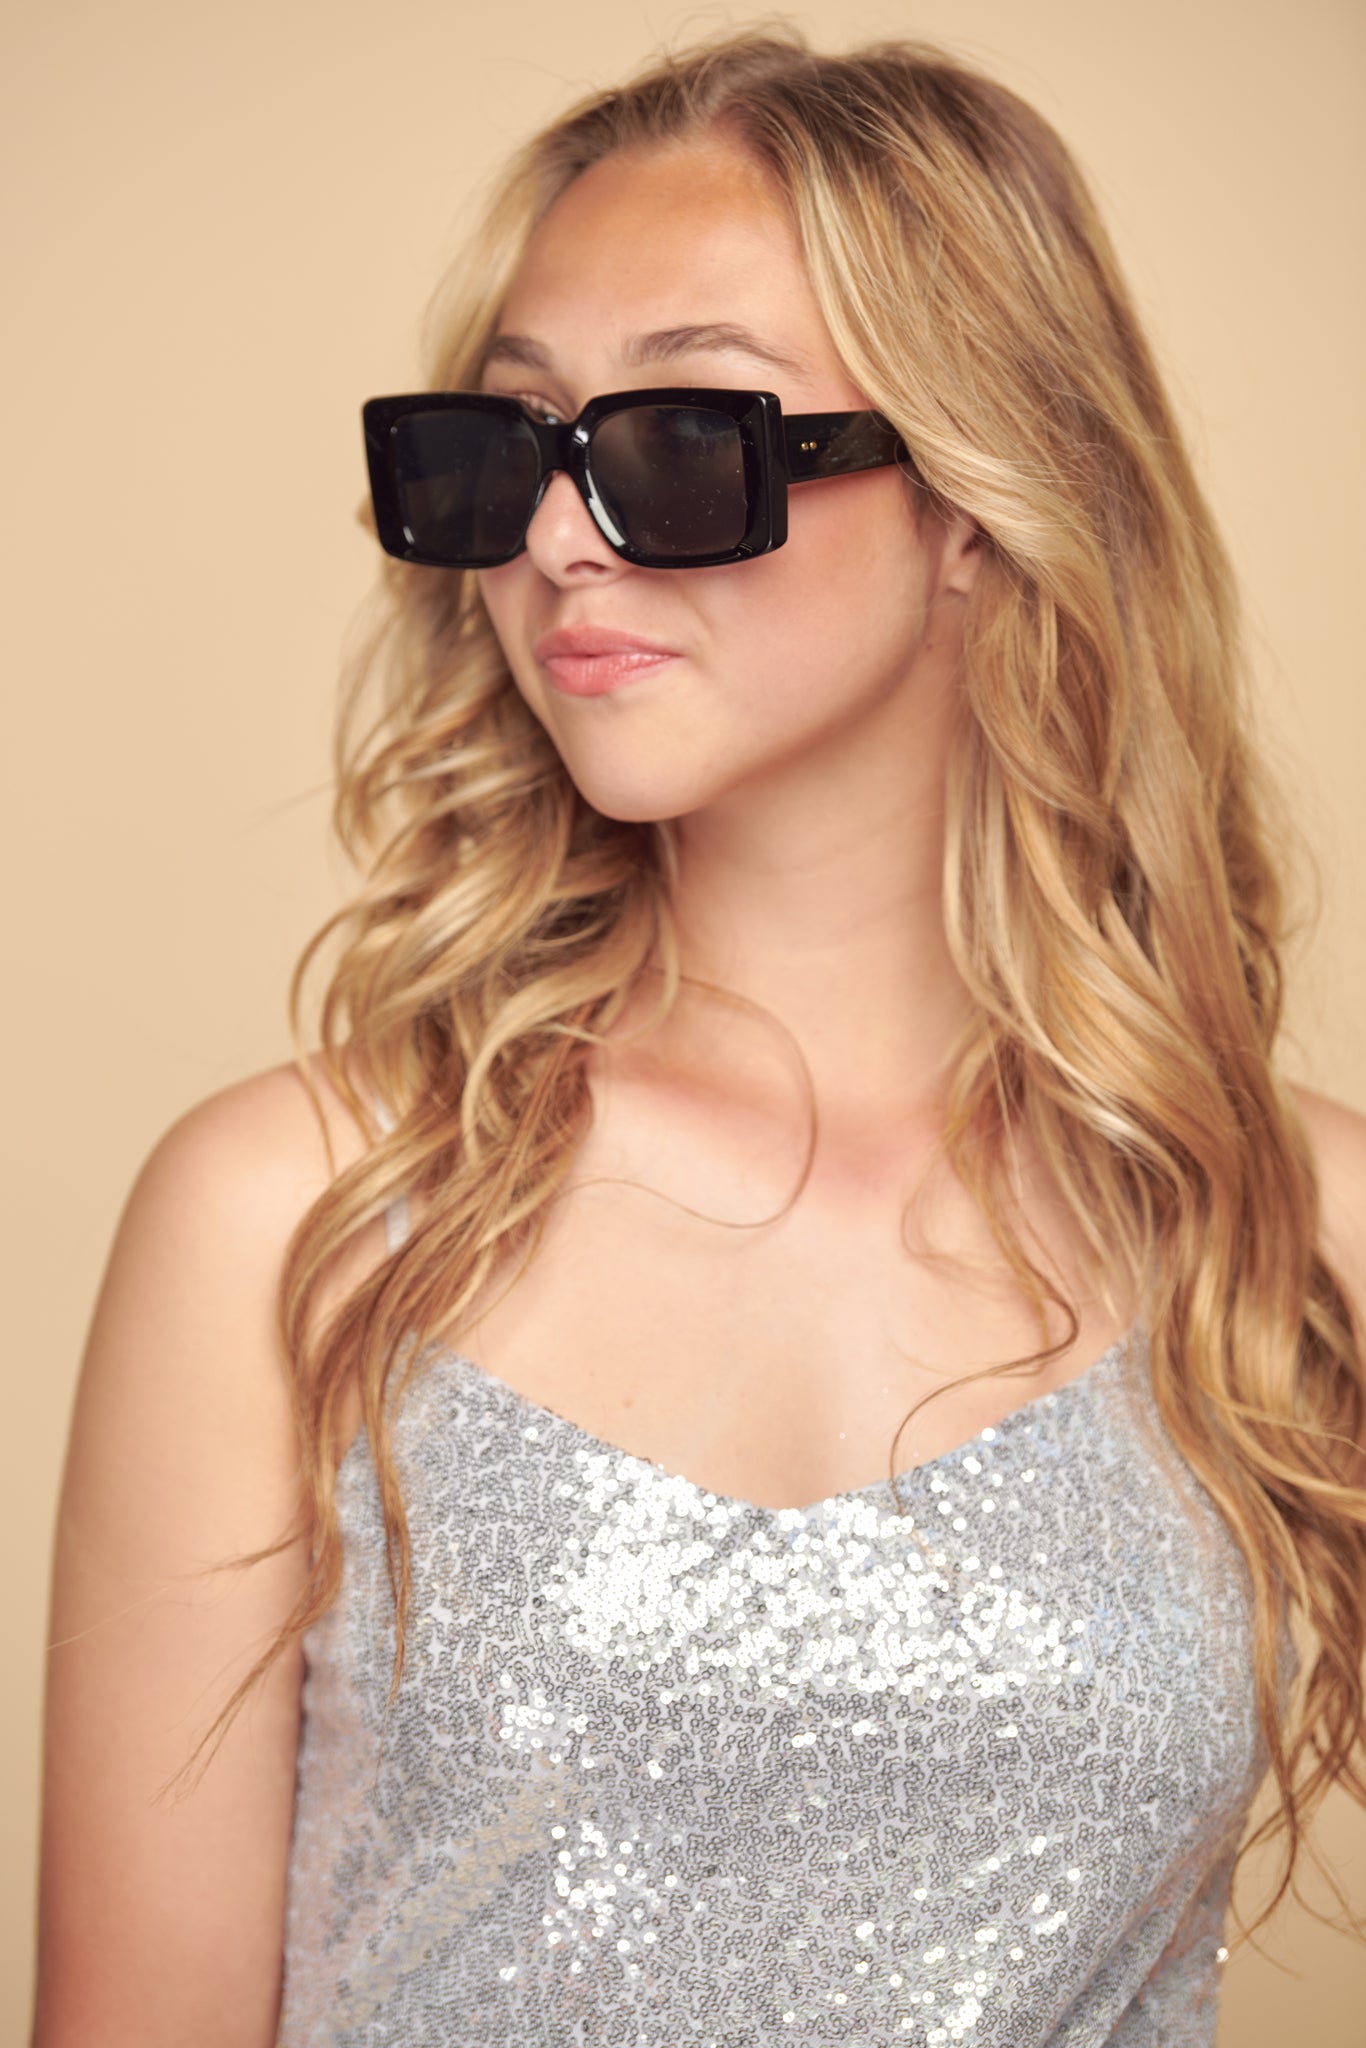 Black square large sunglasses on blonde girl.